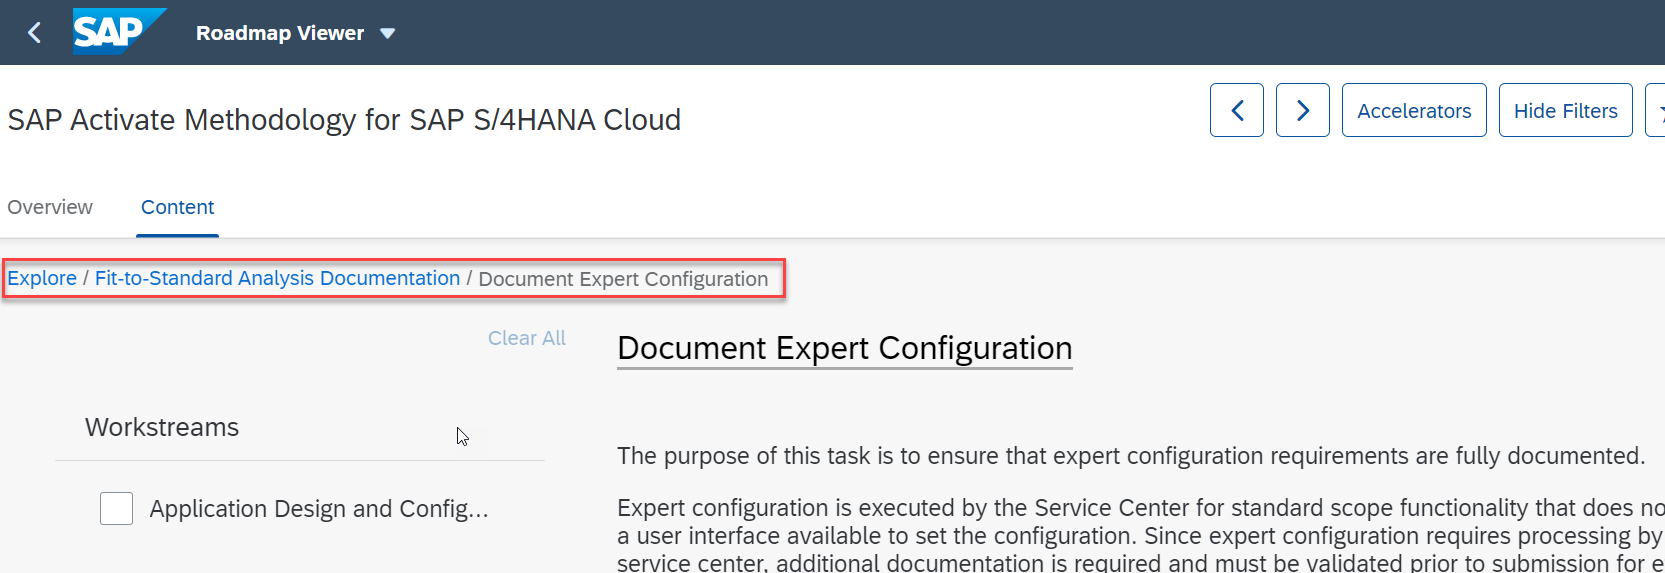 Document Expert Configuration